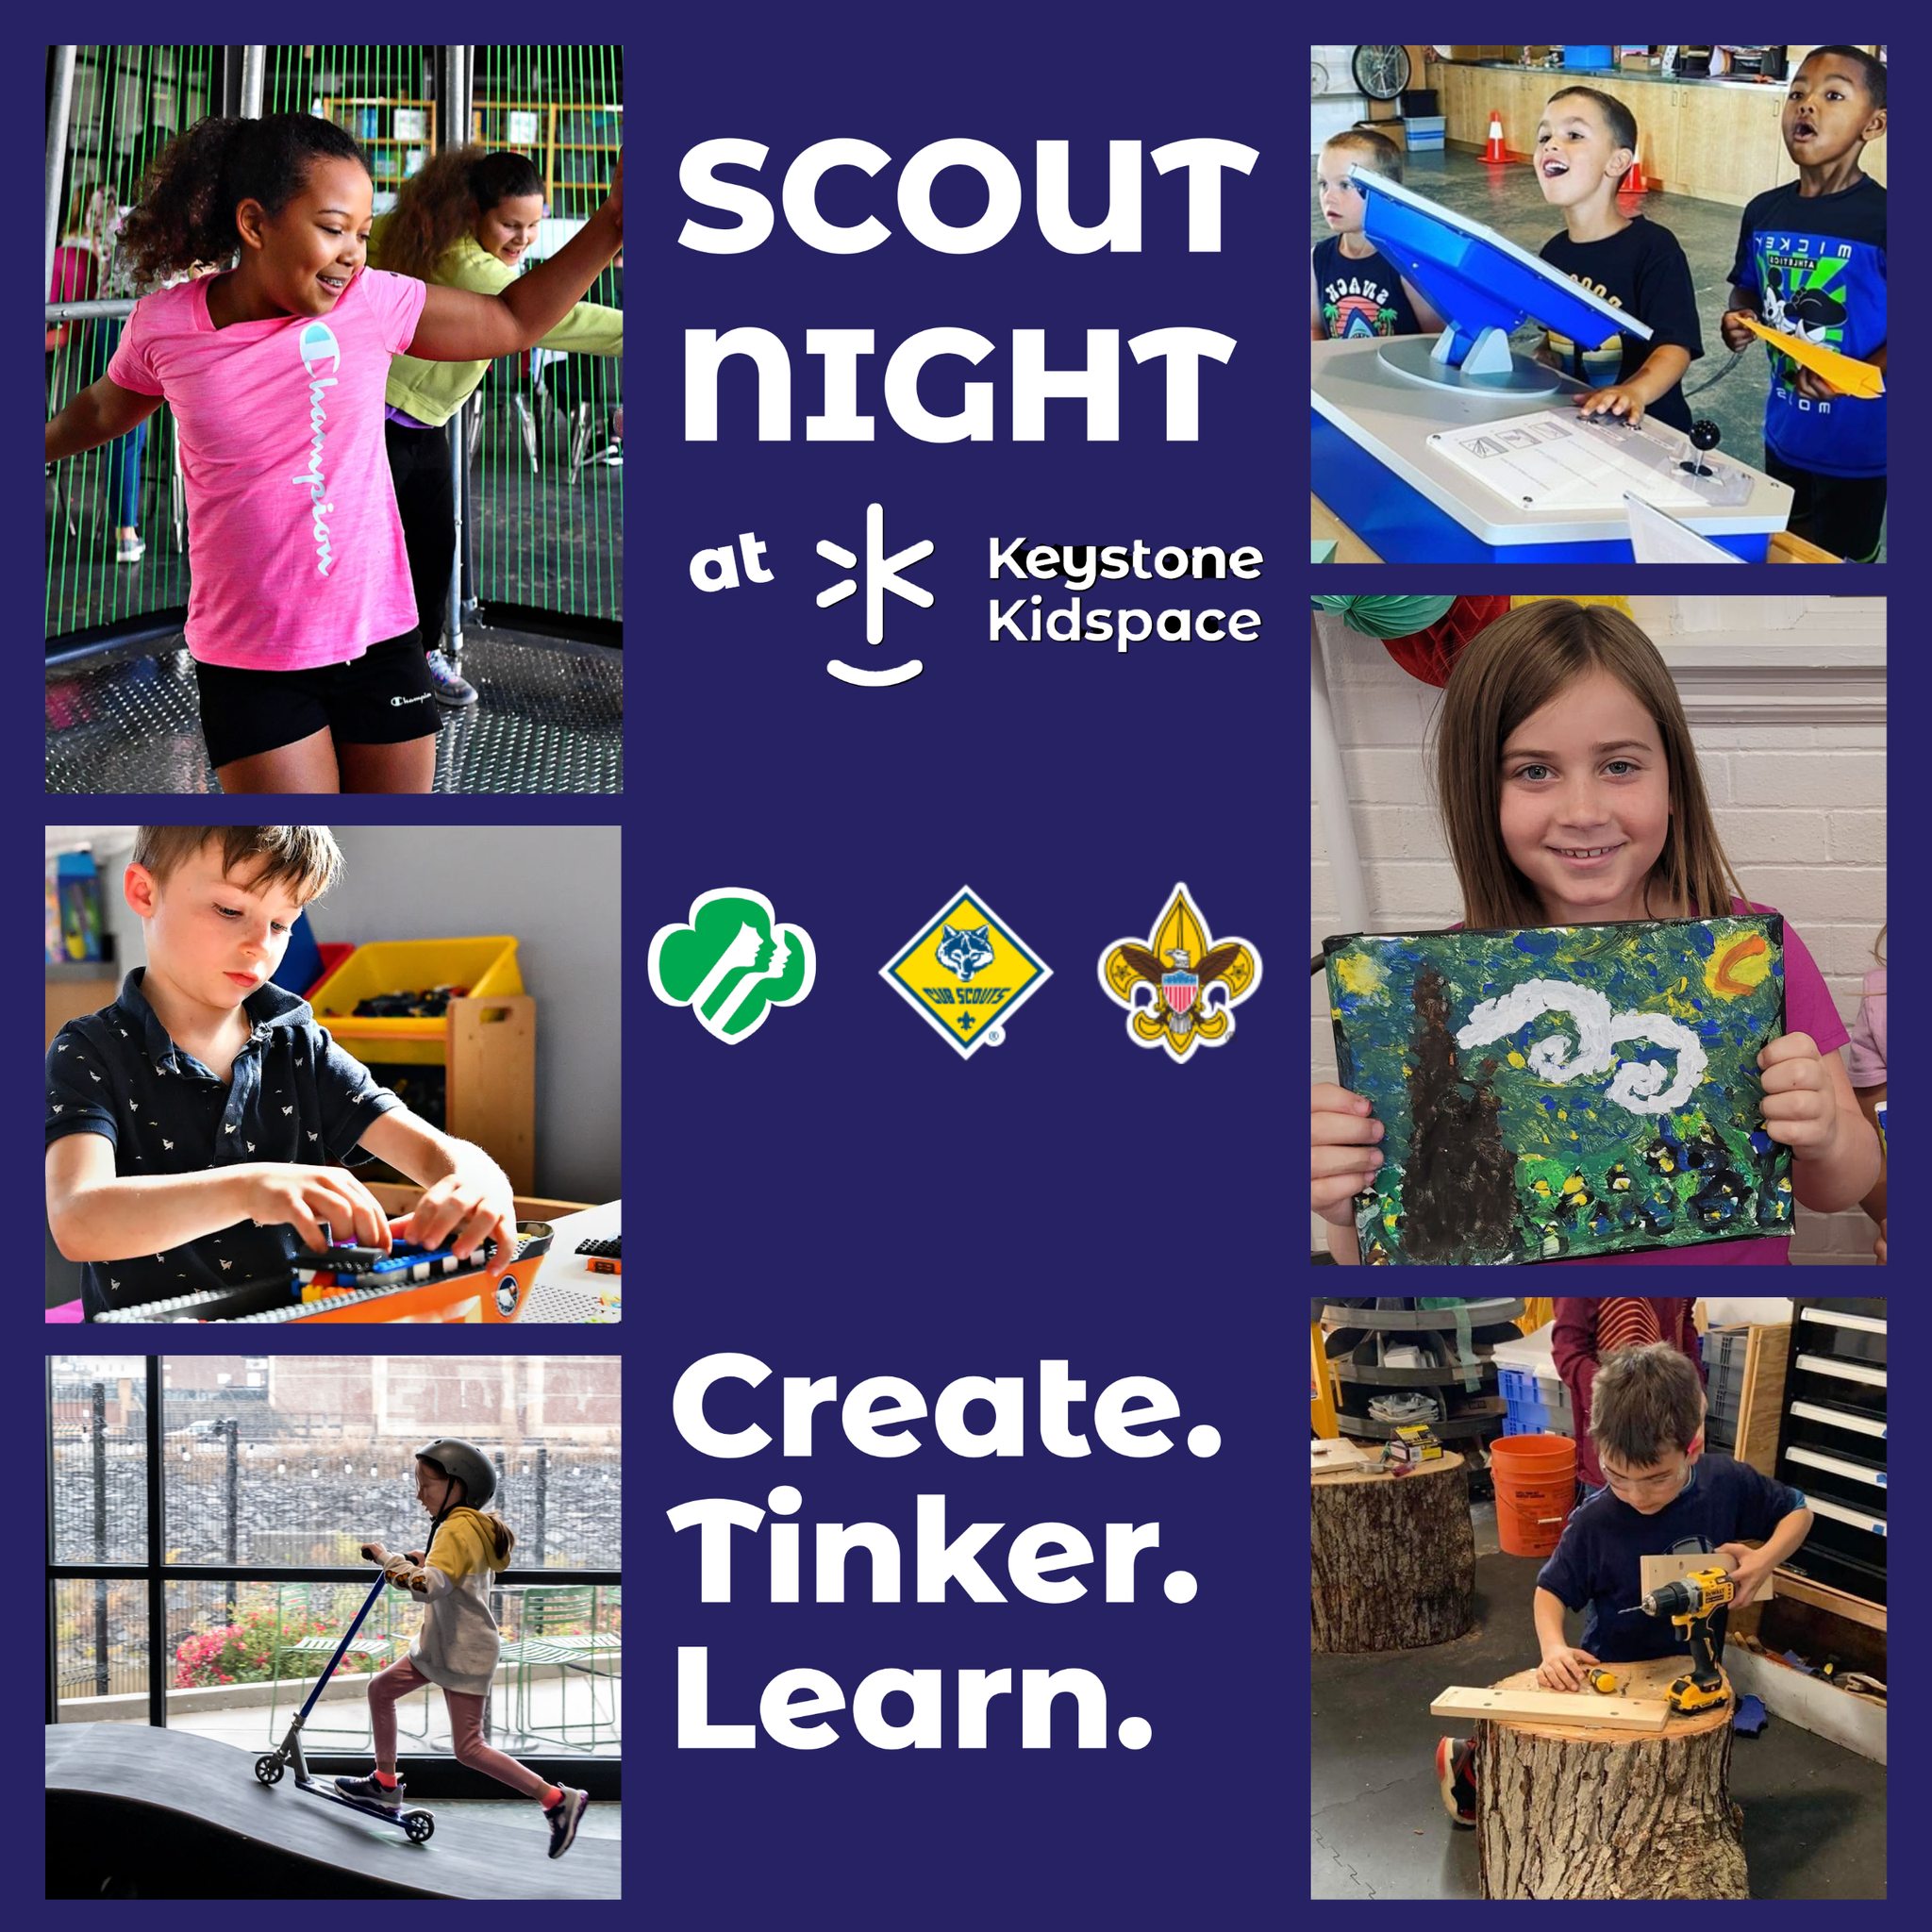 Scout Night at Keystone Kidspace